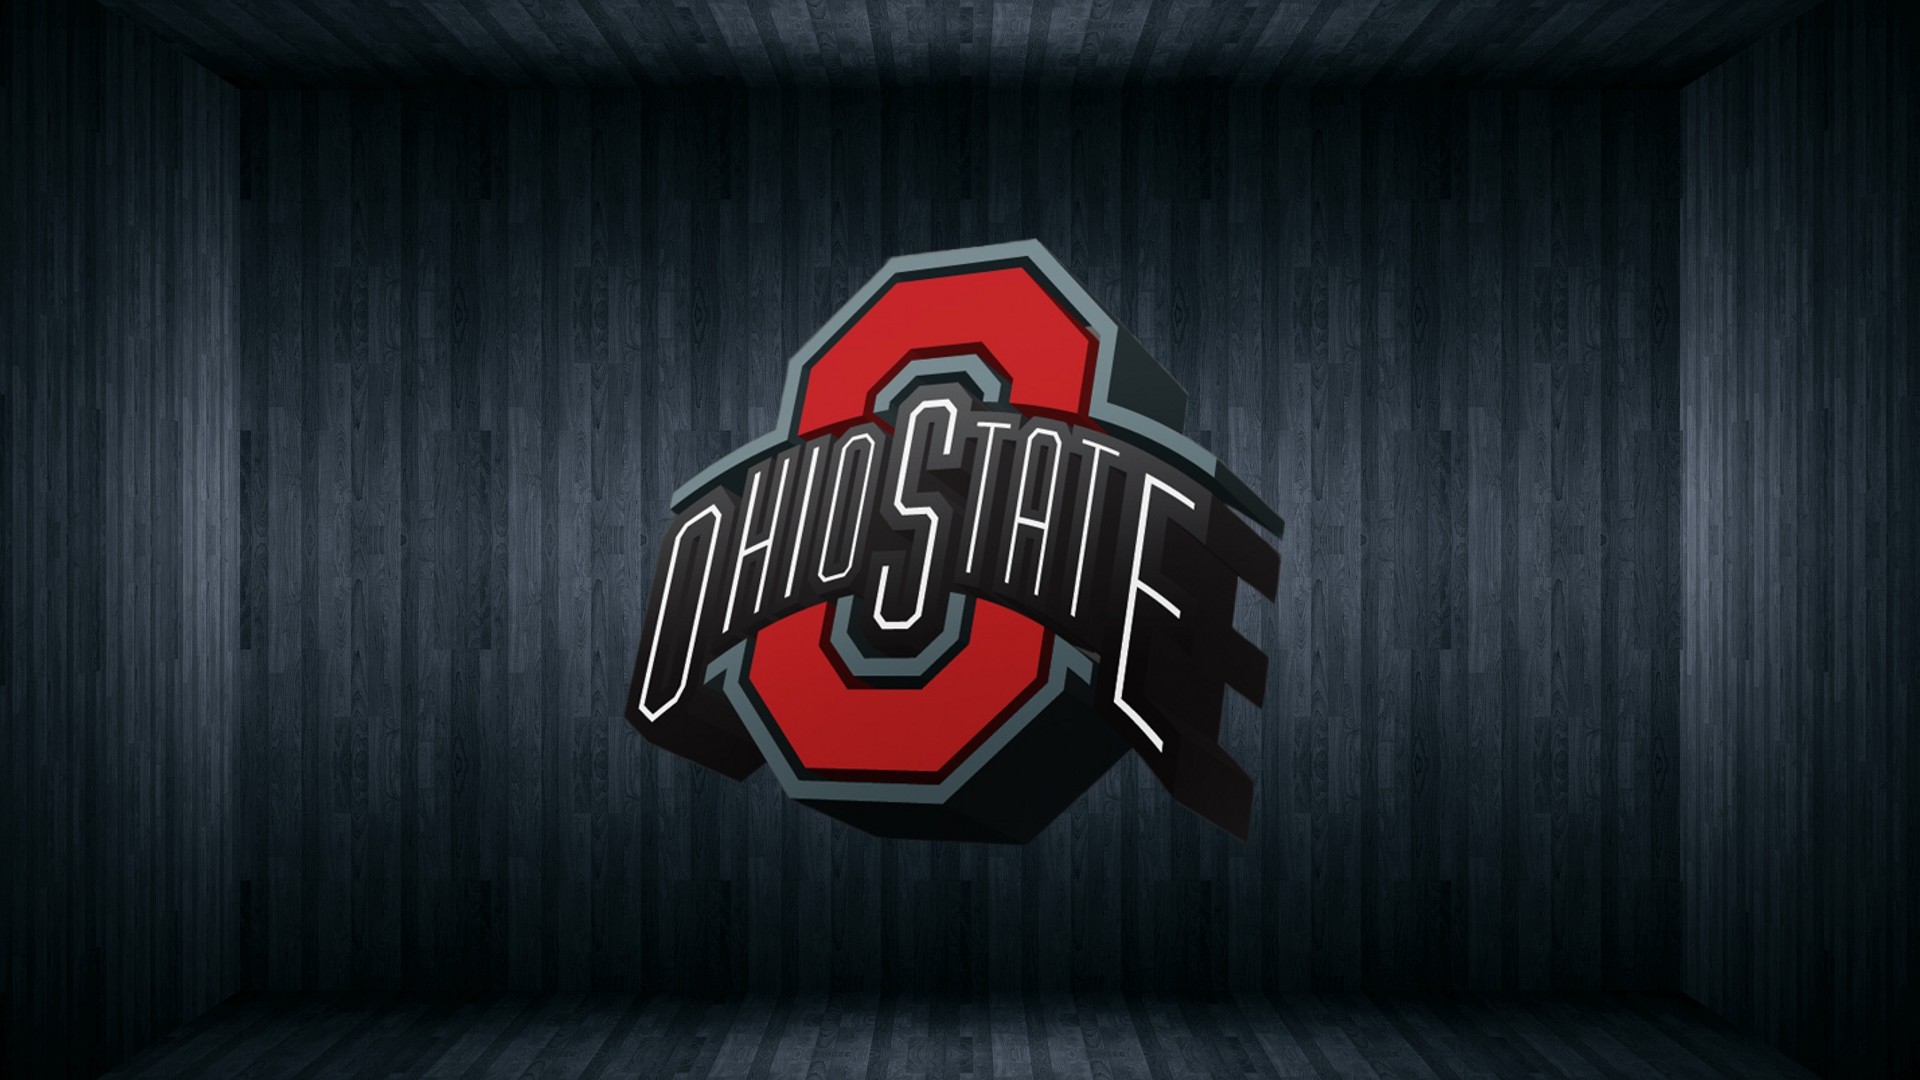 OSU Wallpaper 205 – Ohio State Football Wallpaper 29091432 – Fanpop